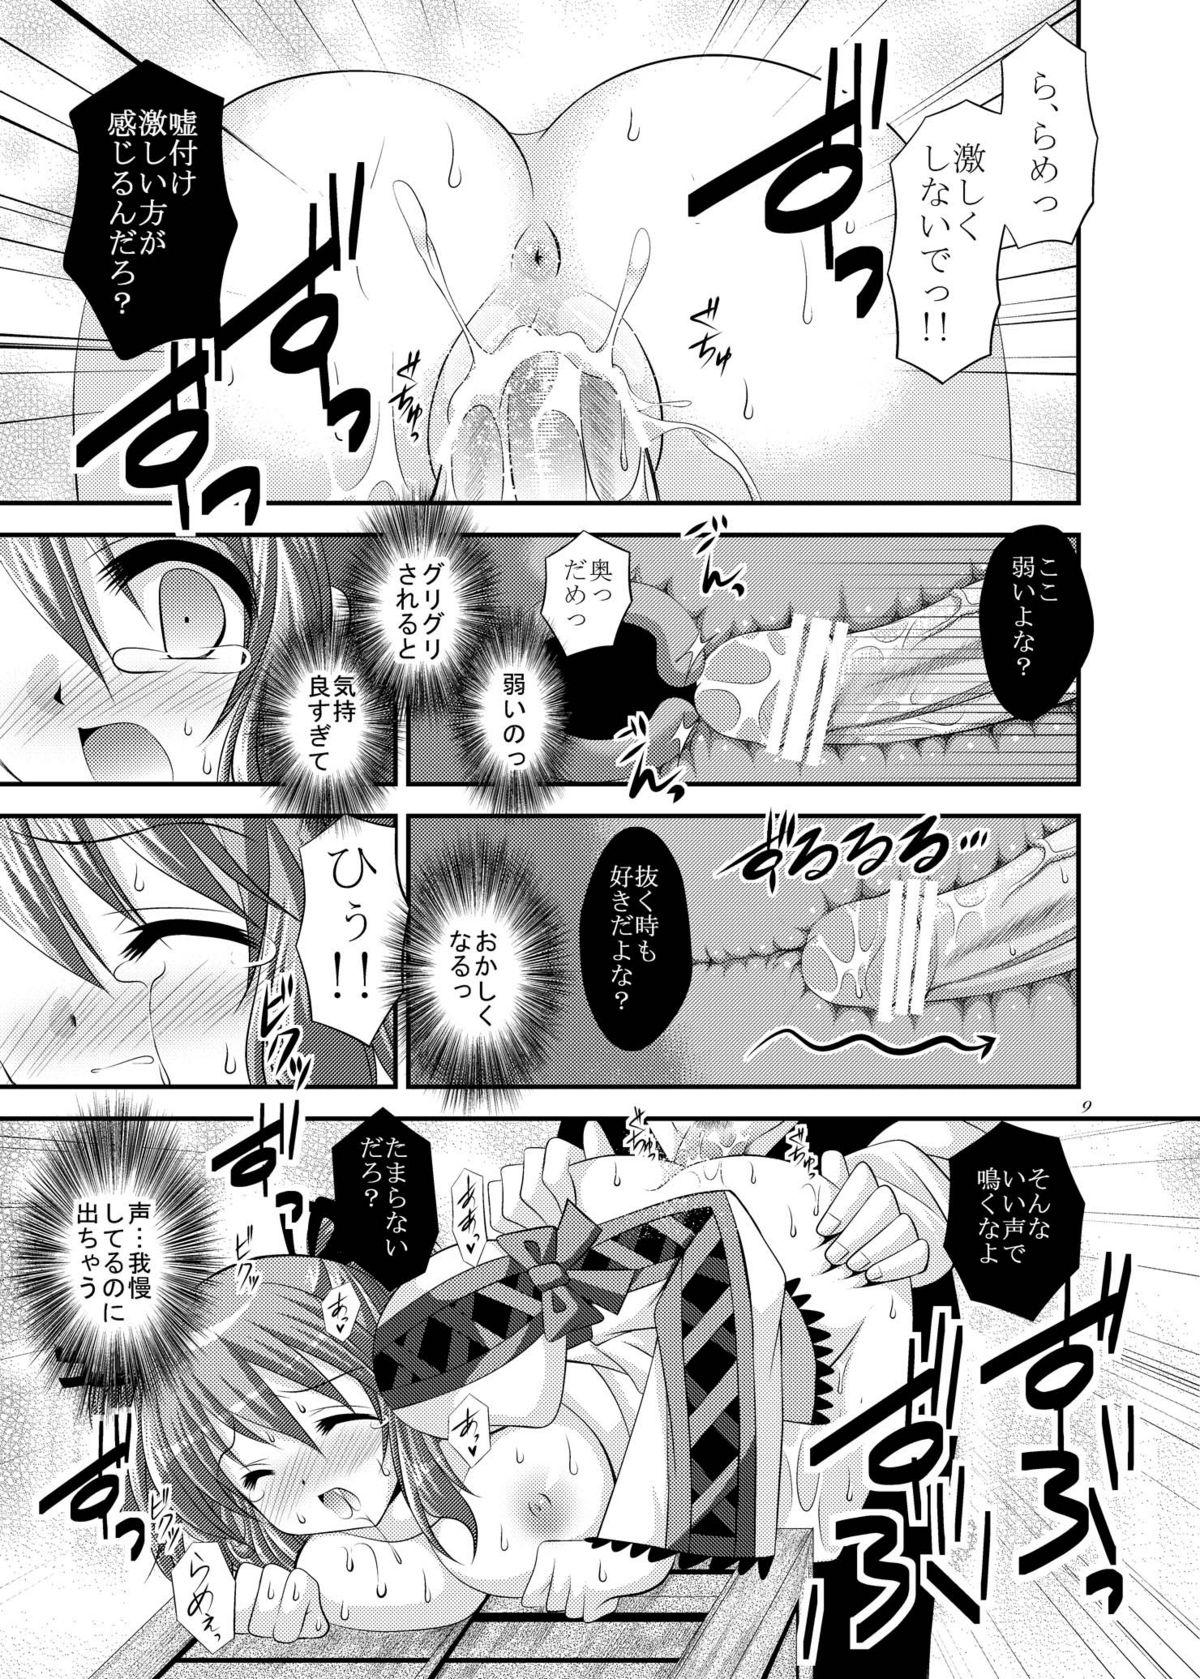 Assfingering Kienu Sora - Tales of graces Closeup - Page 9